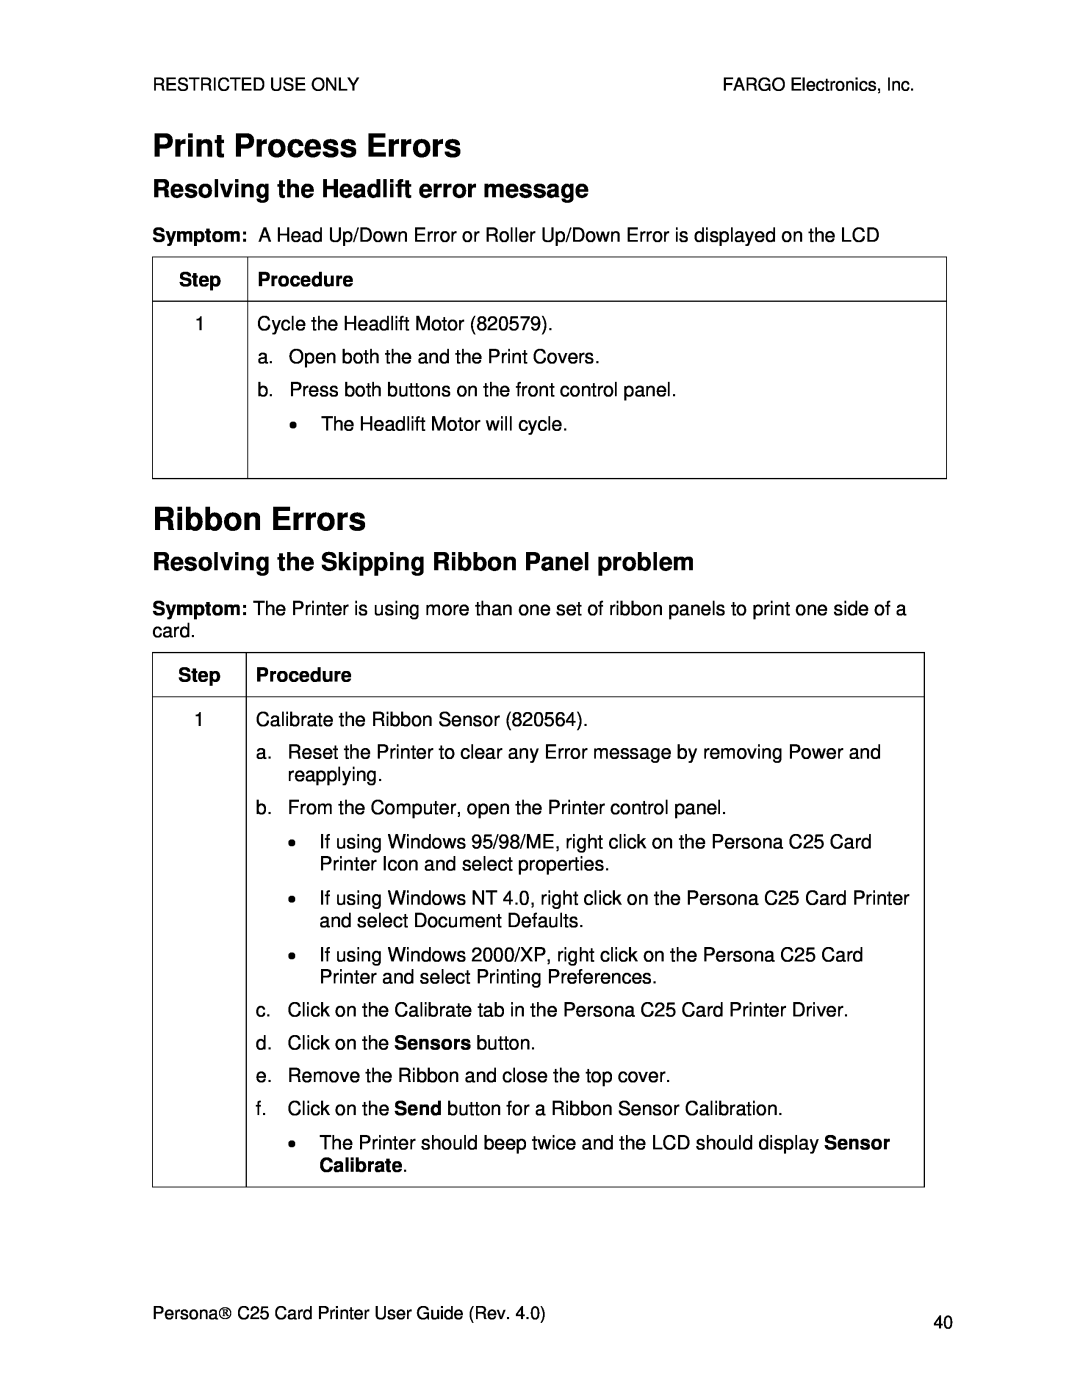 FARGO electronic S000256 manual Print Process Errors, Ribbon Errors, Resolving the Headlift error message 